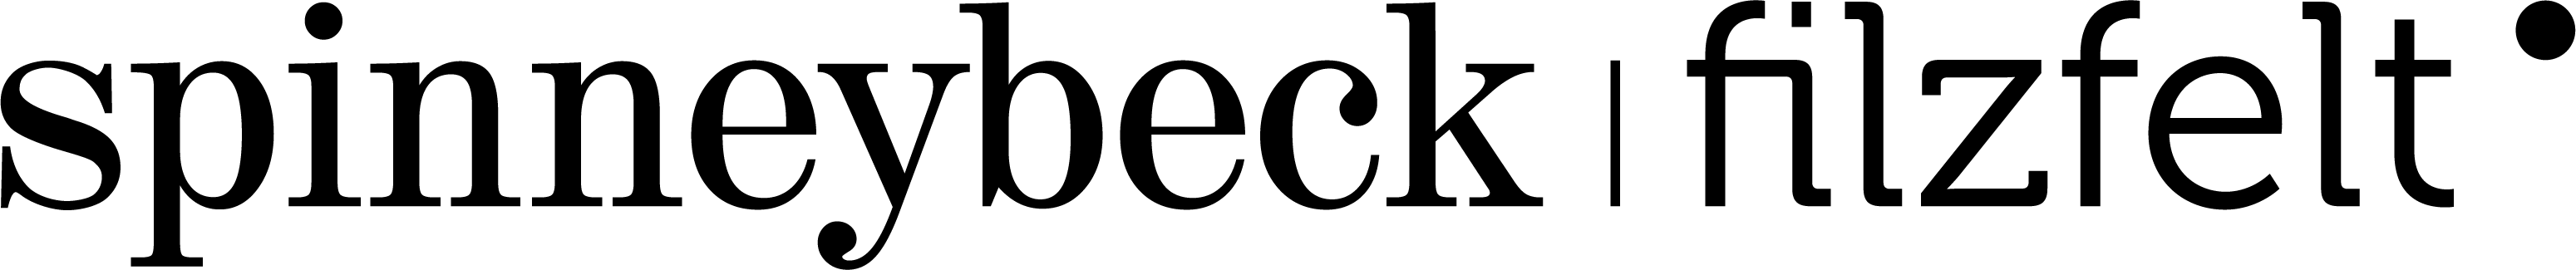 Spinneybeck Filz Felt Logo 01